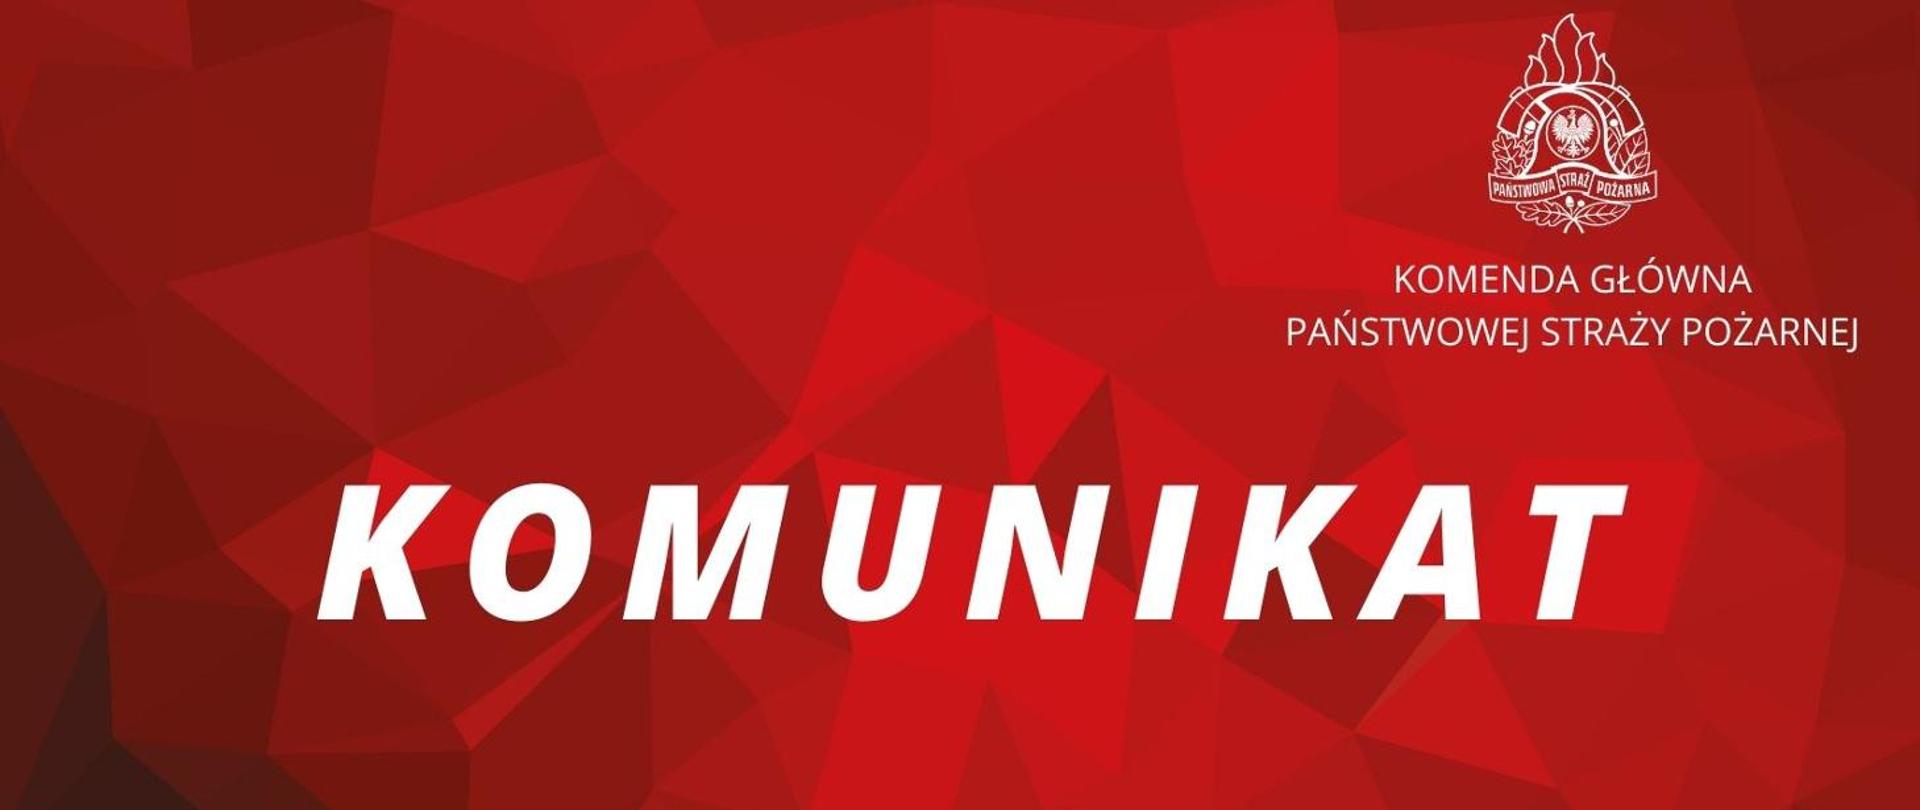 Na czerwonym tle logo PSP i napis Komunikat KG PSP